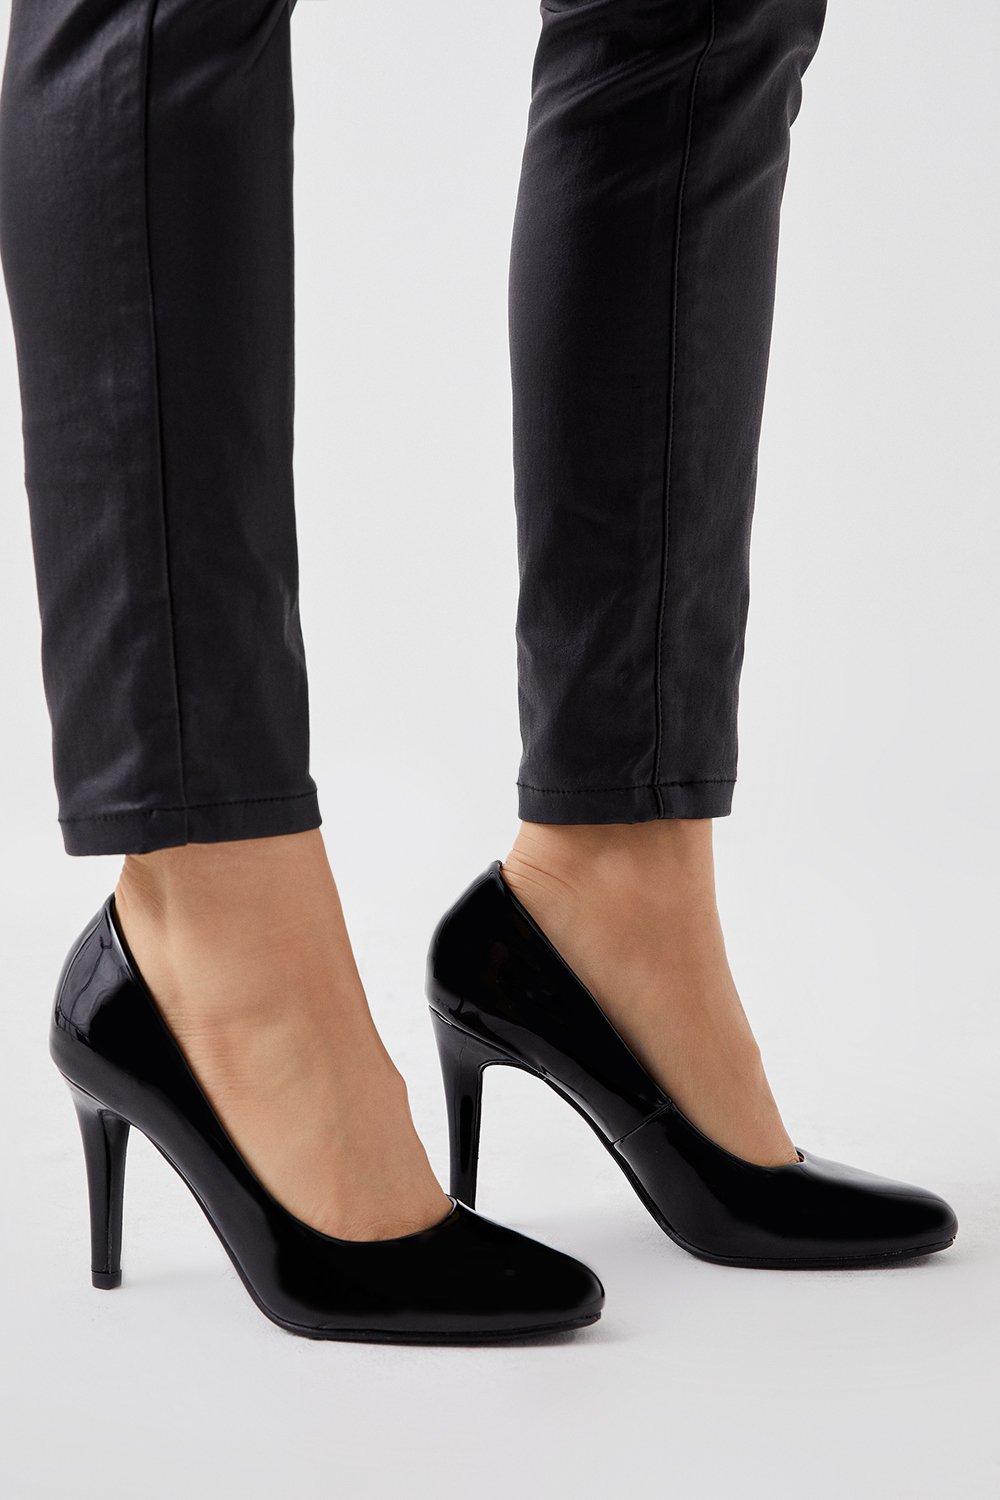 Women’s Dana Round Toe Stiletto Court Shoes - true black - 7